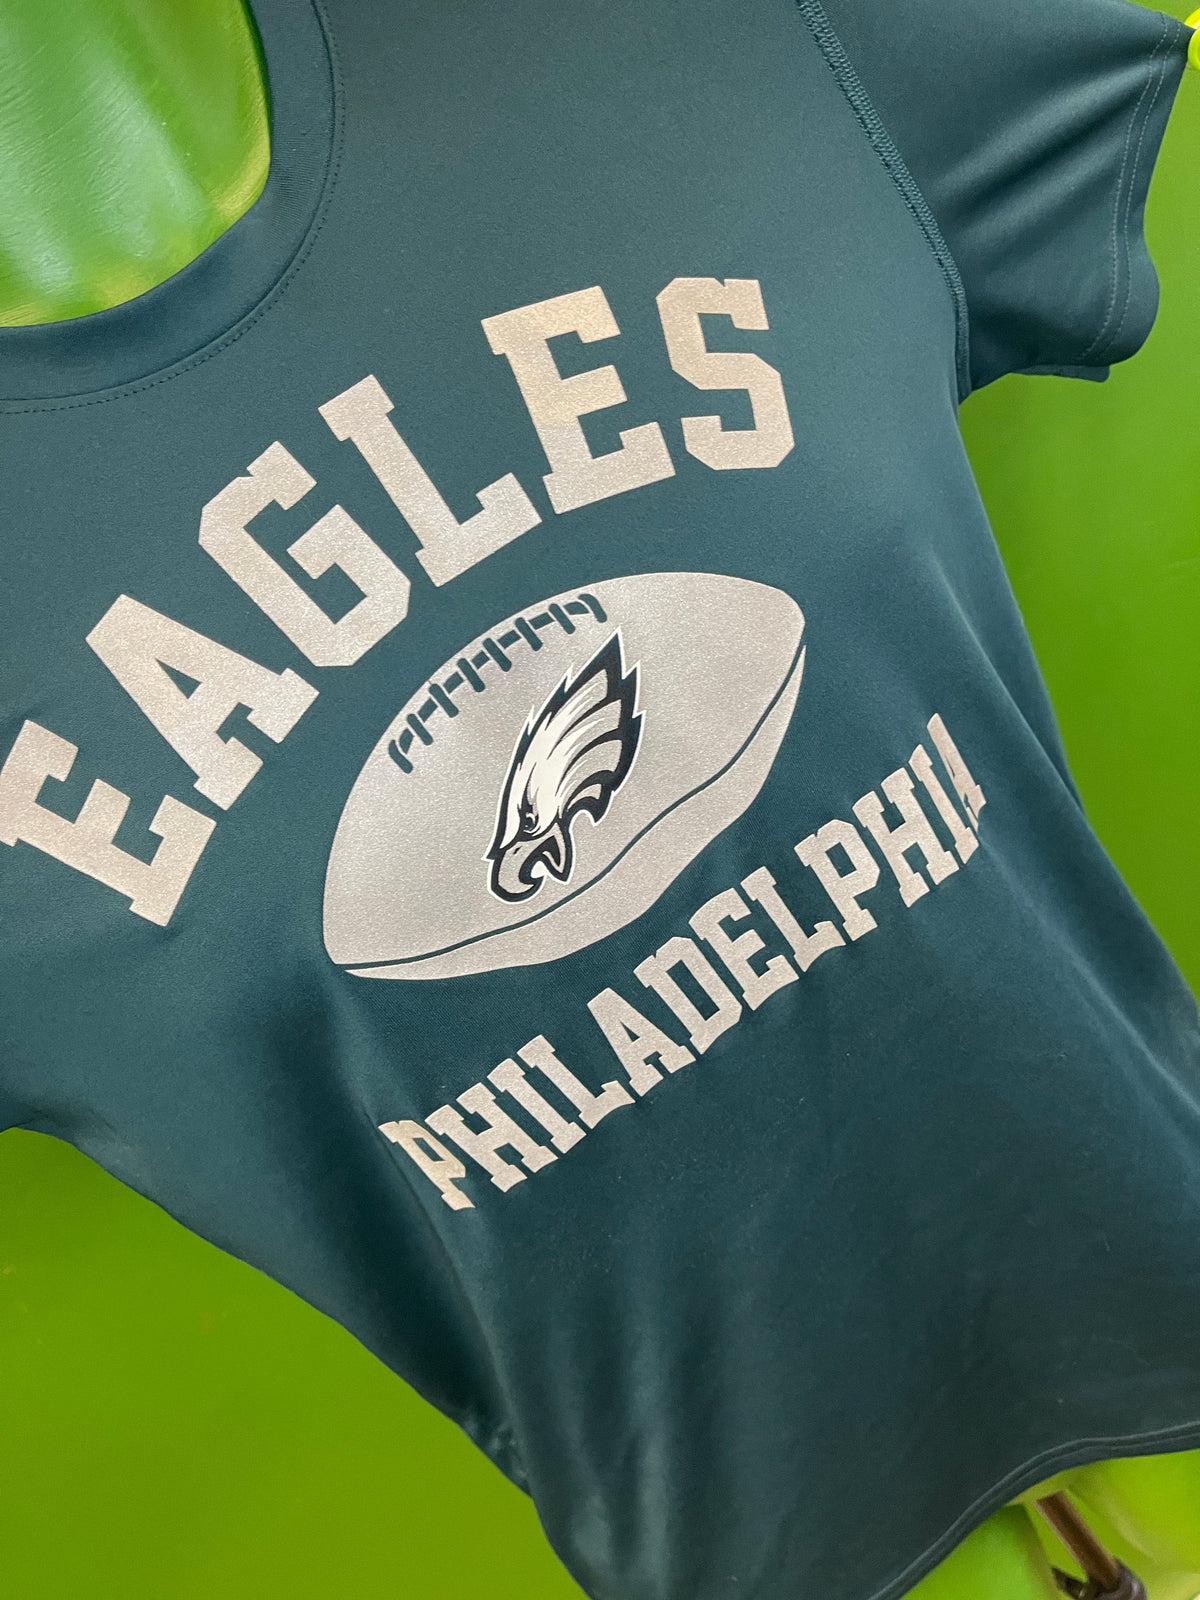 NFL Philadelphia Eagles Dri-Tek Sparkly Girls' T-Shirt Youth Large 14-16